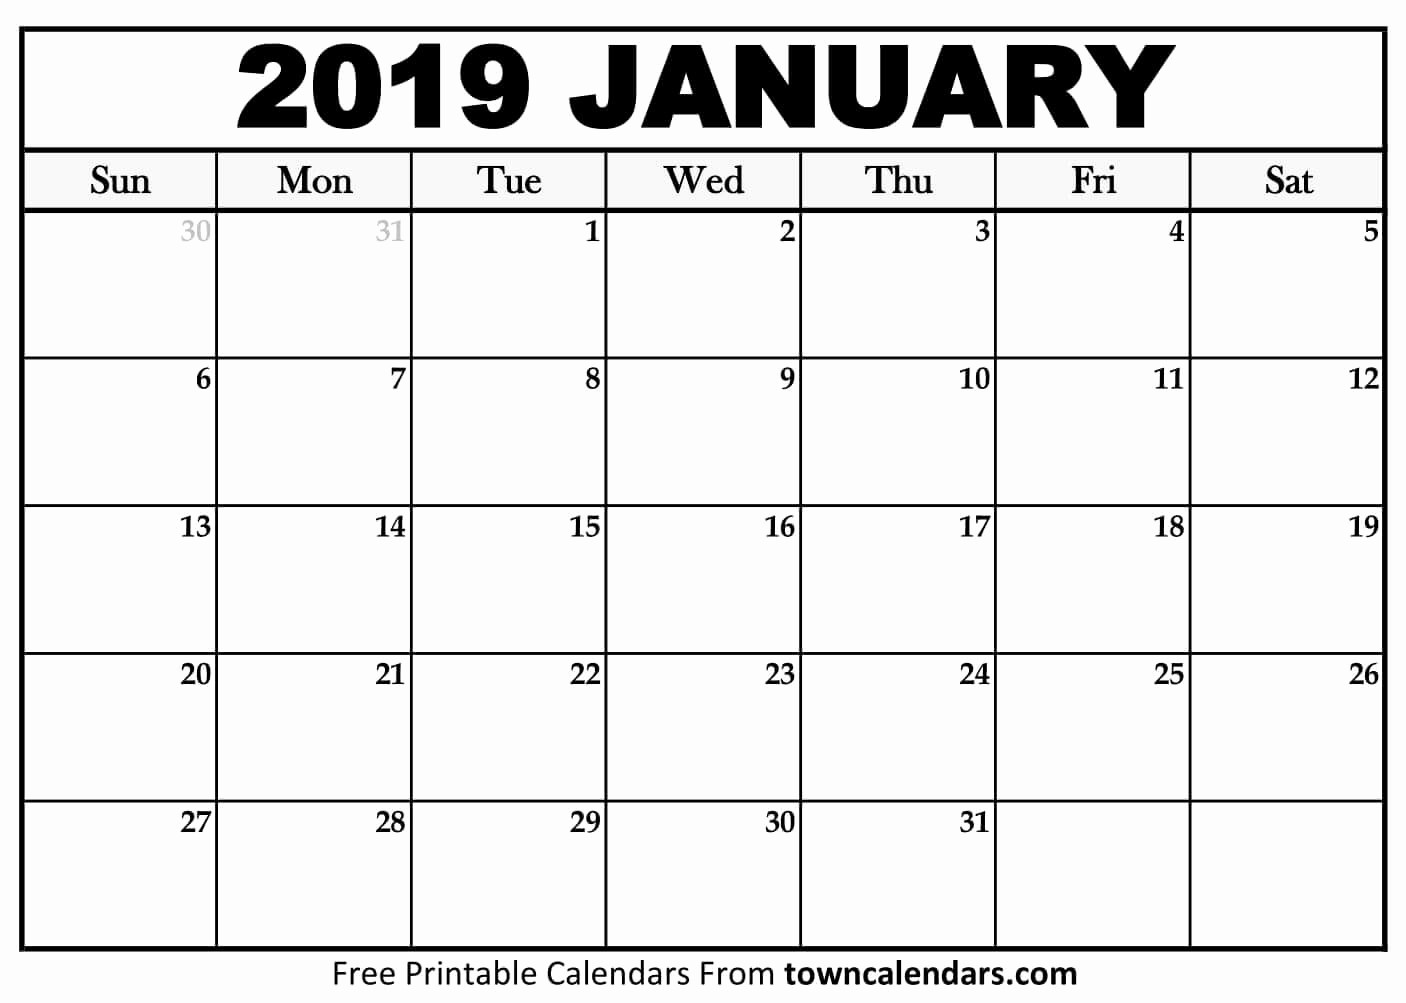 Blank January 2019 Calendar Template Lovely Printable January 2019 Calendar towncalendars